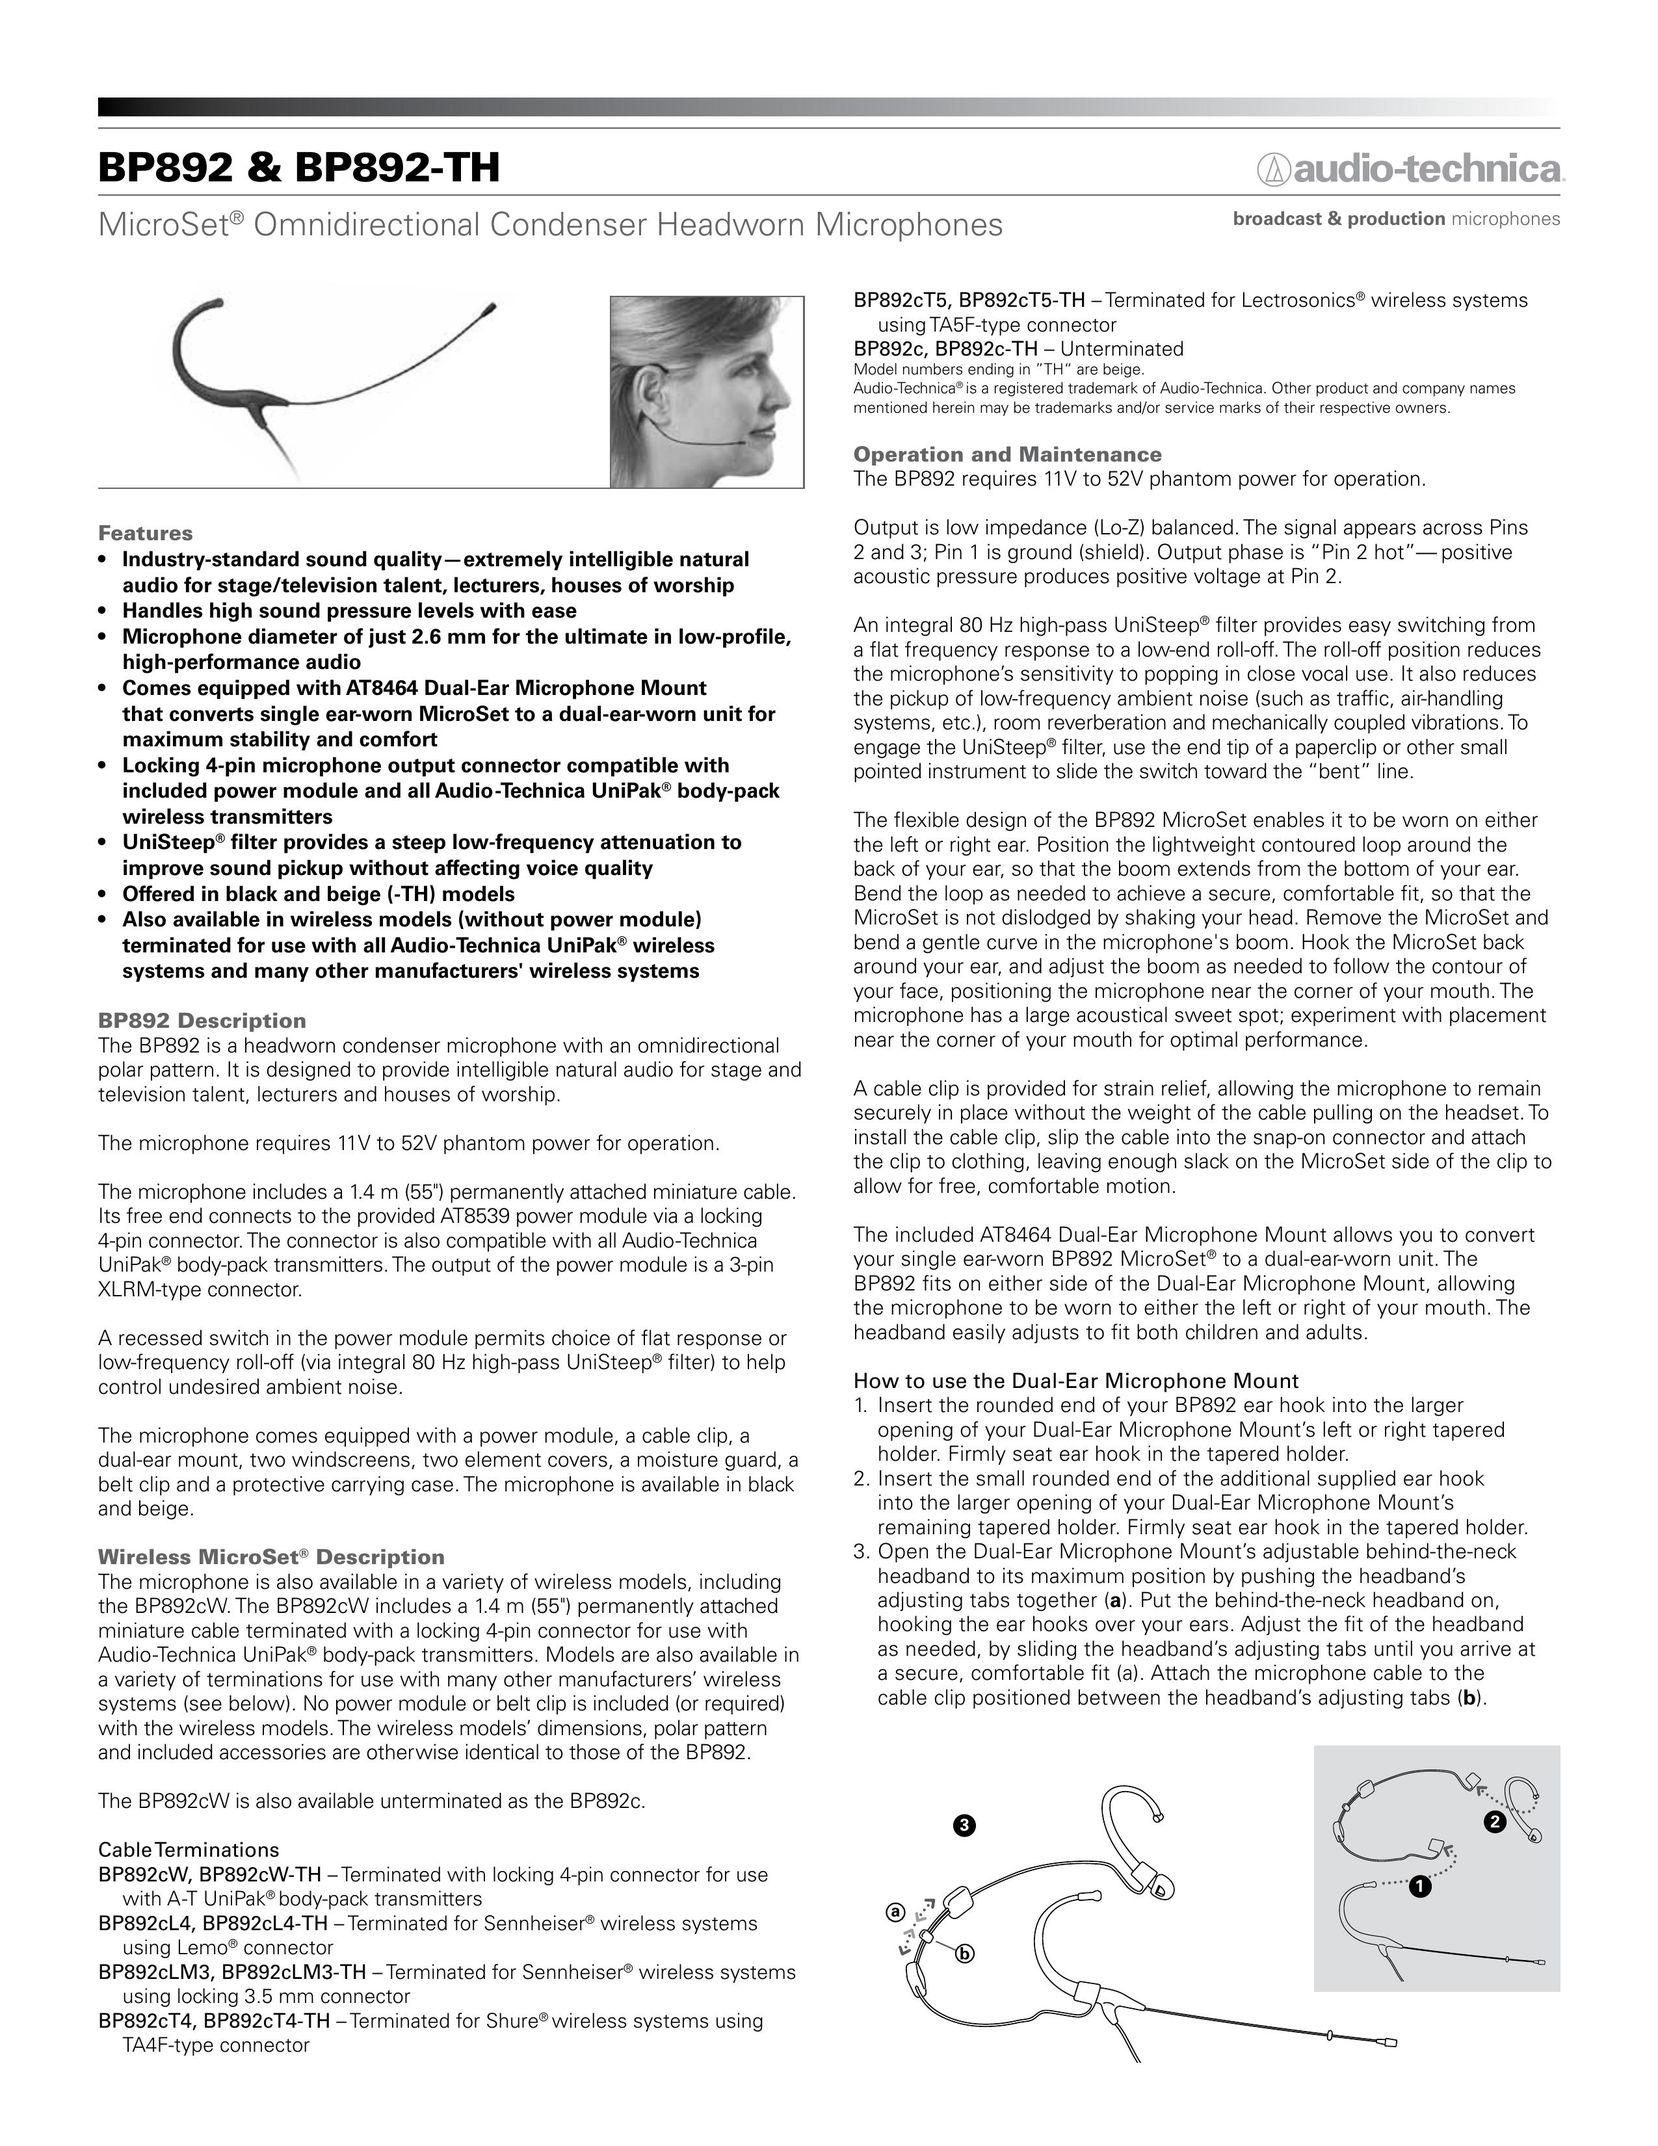 Audio-Technica BP892 Headphones User Manual